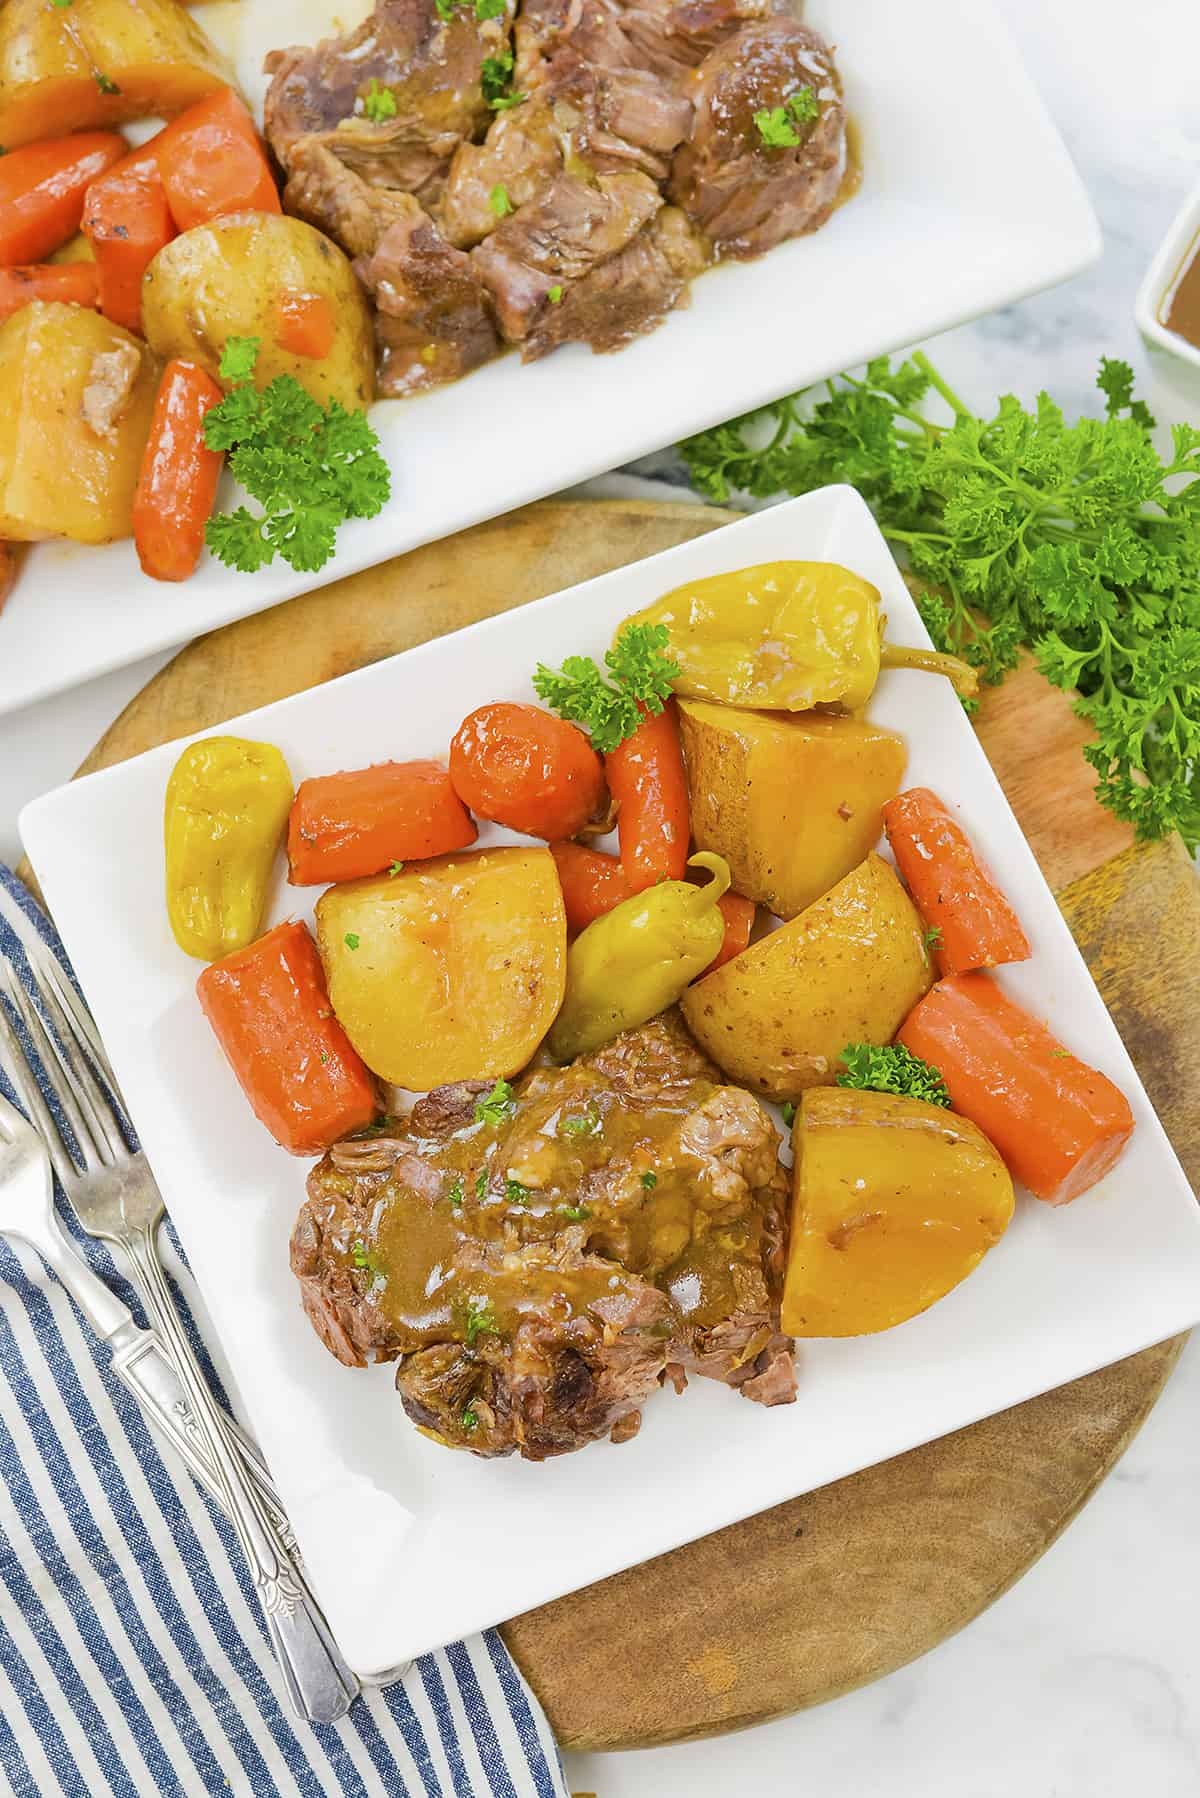 Plate of pot roast, carrots, and potatoes.